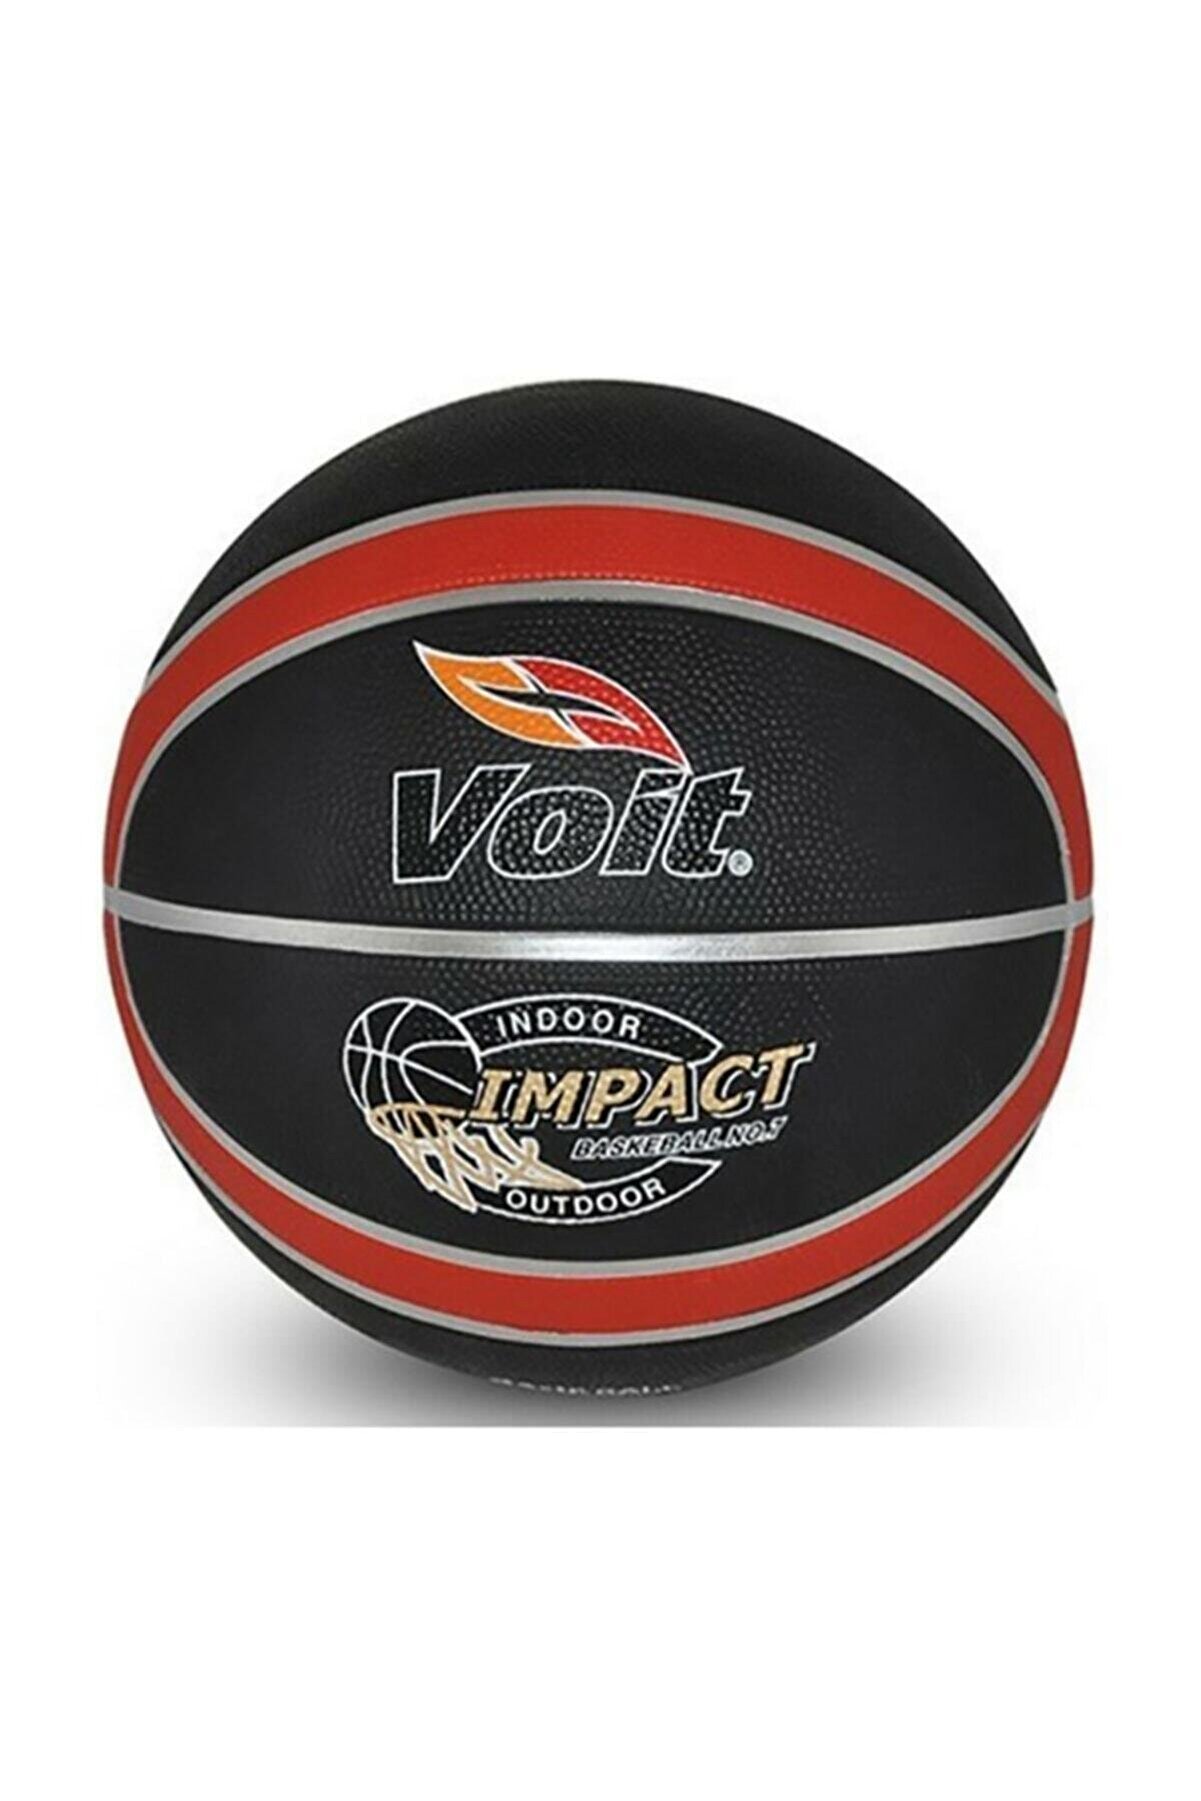 Voit Impact 057 Basketbol Topu No: 7 Siyah-kırmızı